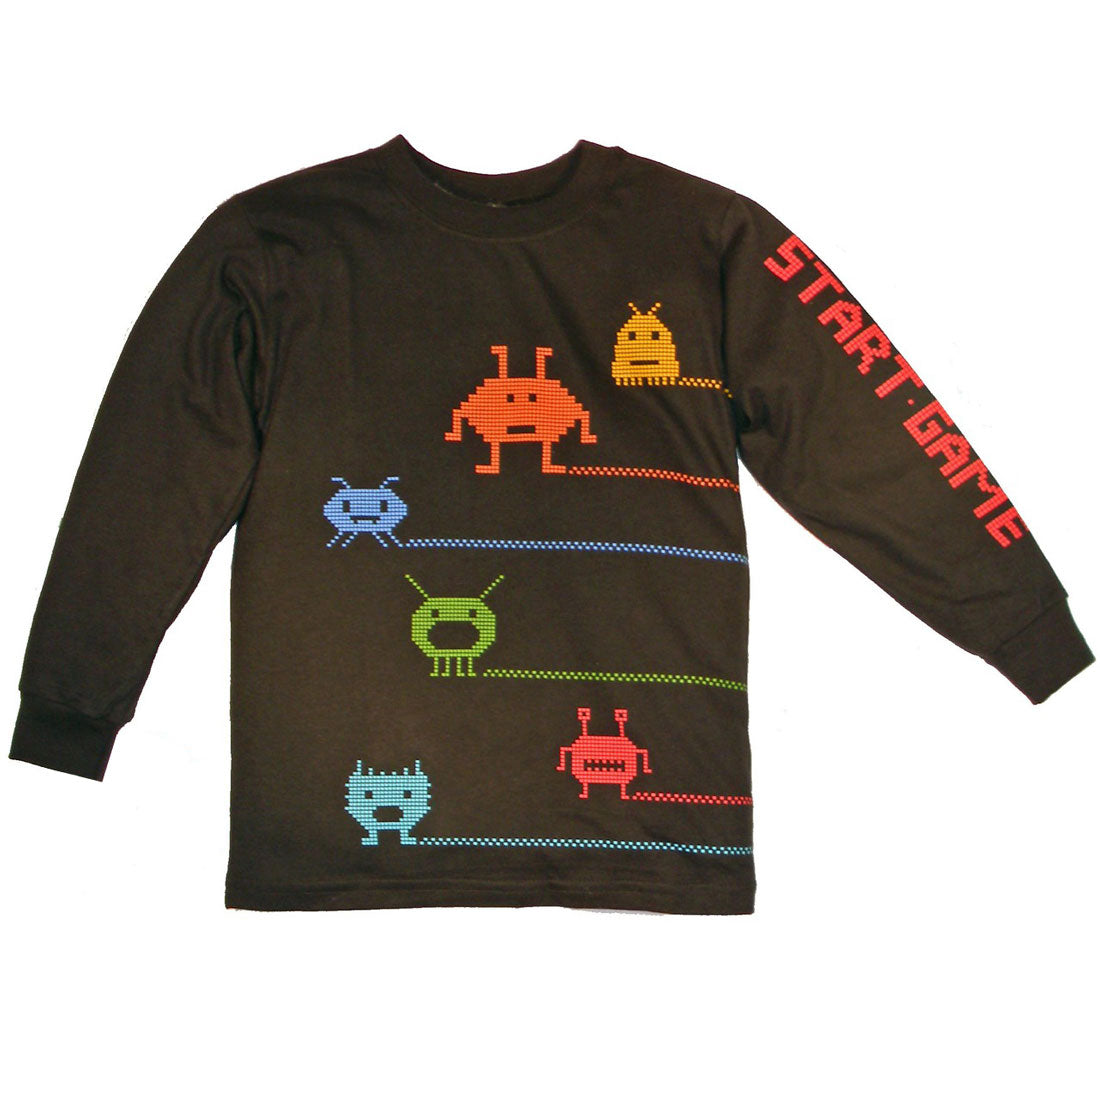 Boys' Gaming Shirt by Tumbleweed